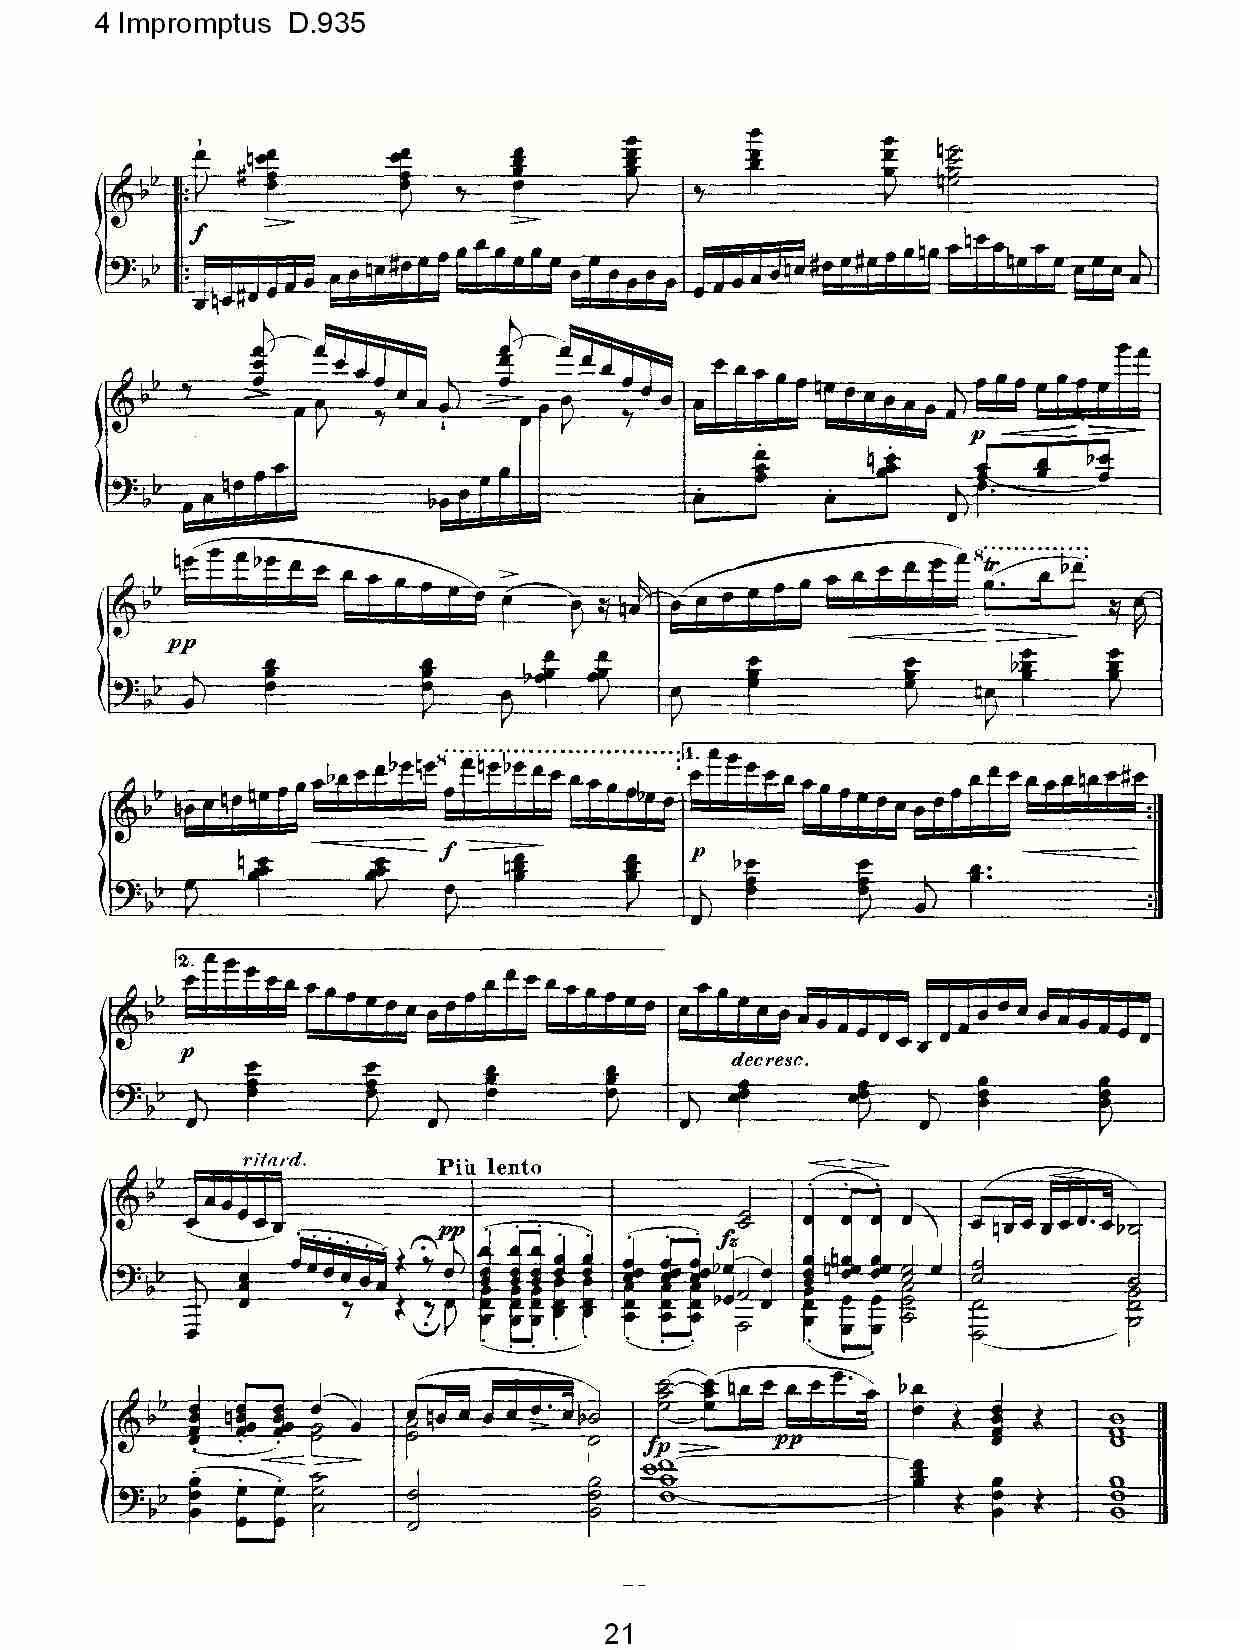 4 Impromptus D.935（4人即兴演奏D.935）钢琴曲谱（图21）